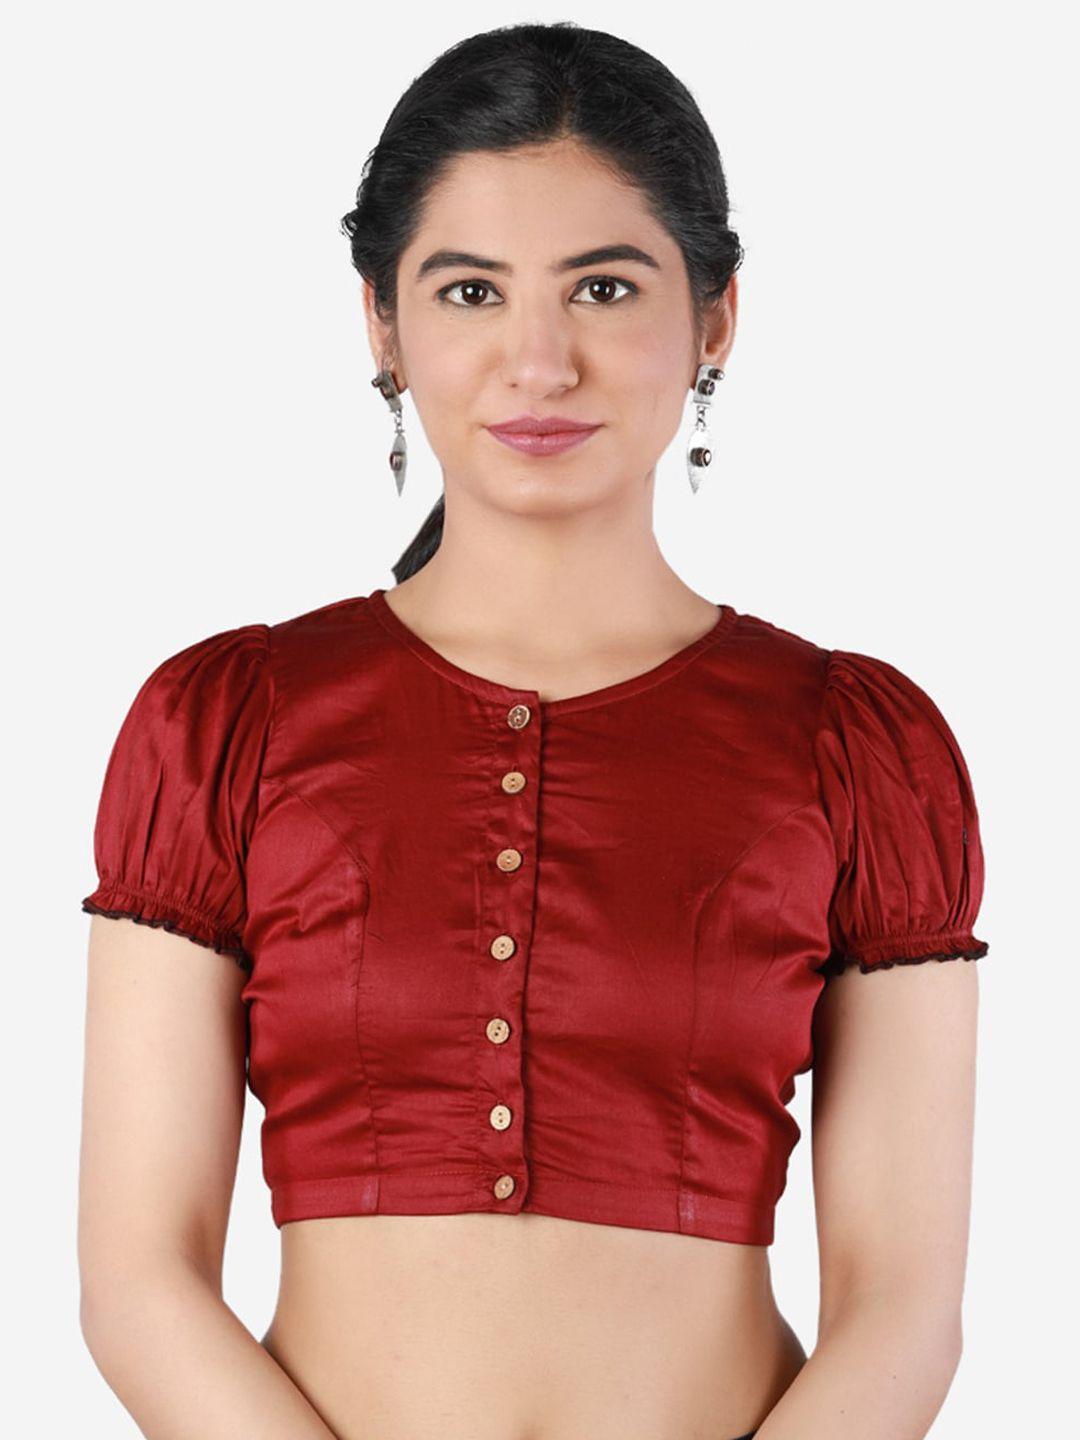 llajja women maroon solid pure cotton saree blouse